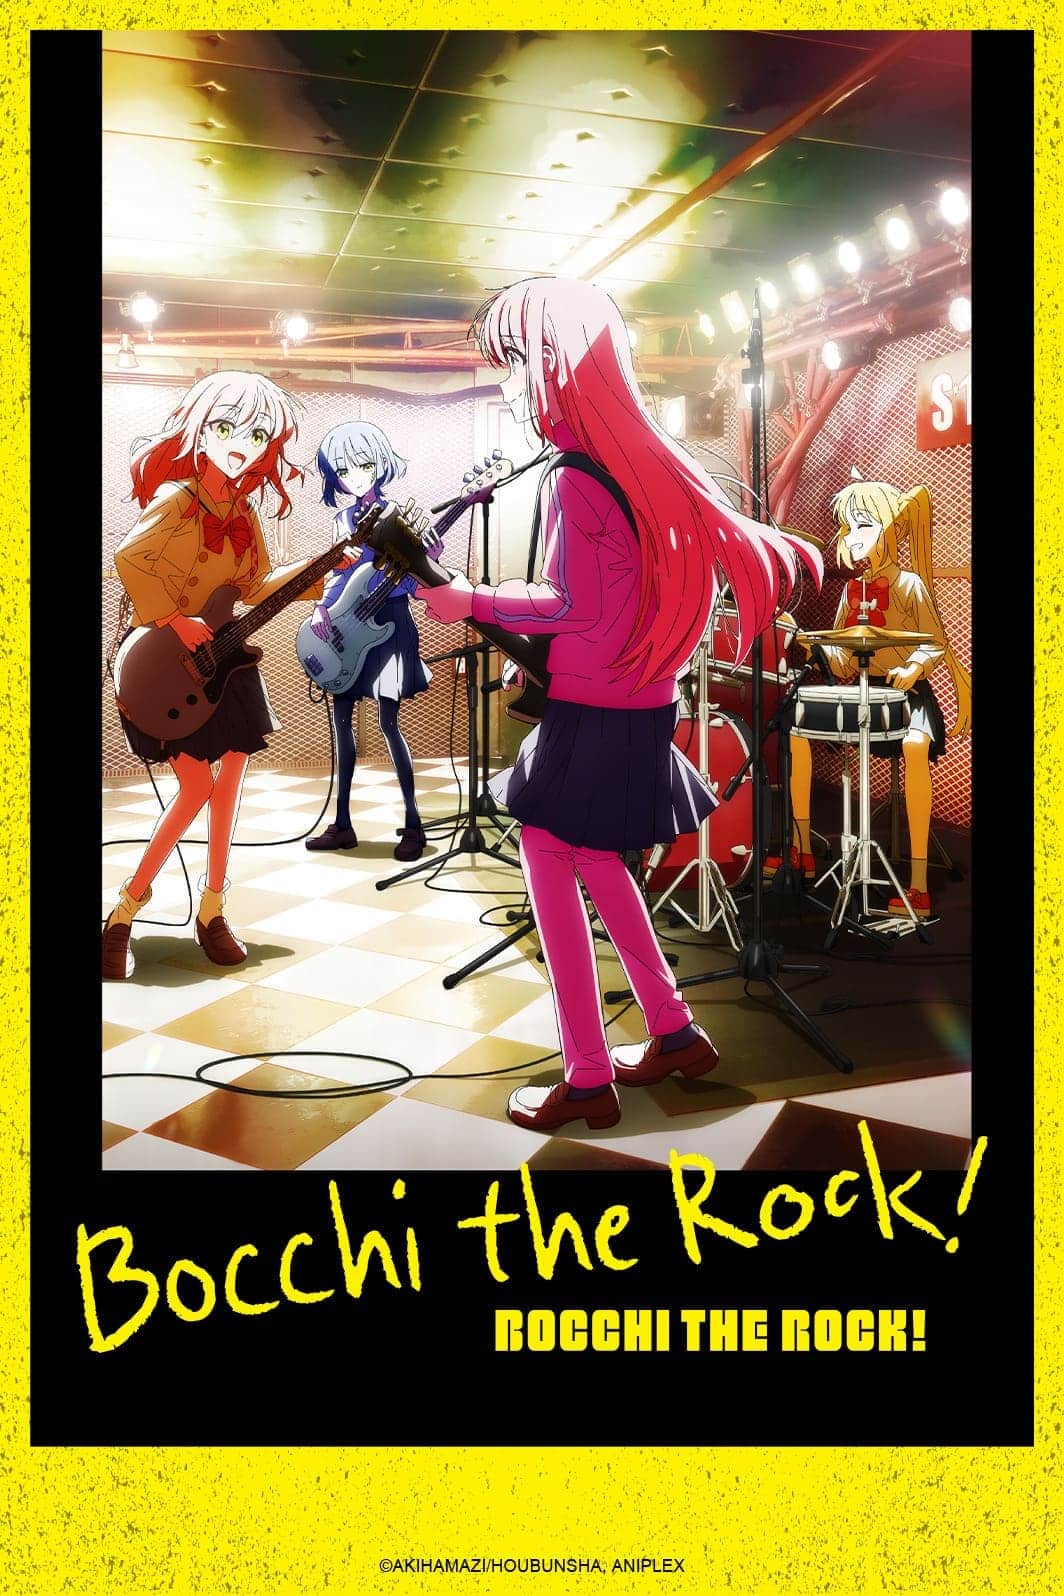 Bocchitherock-Visual-Crunchyroll.jpg